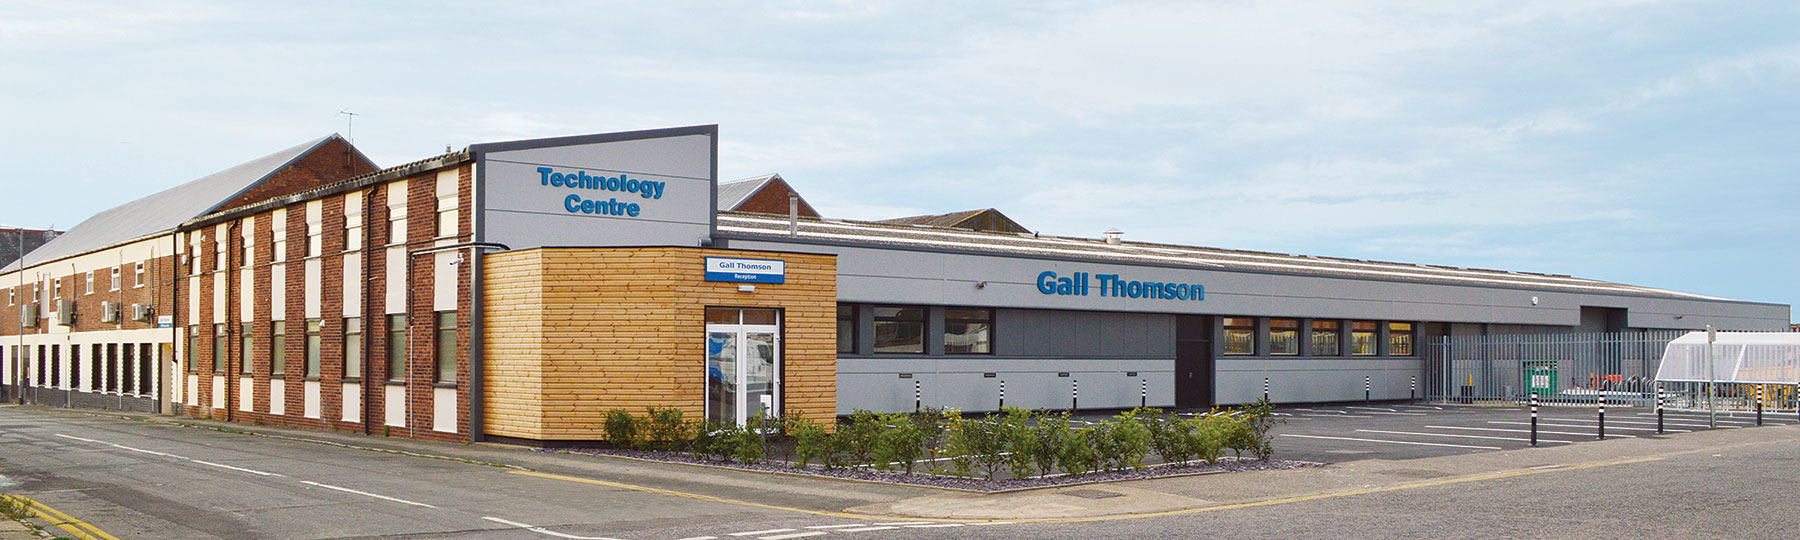 Gall-Thomson-UK-Technology-Centre